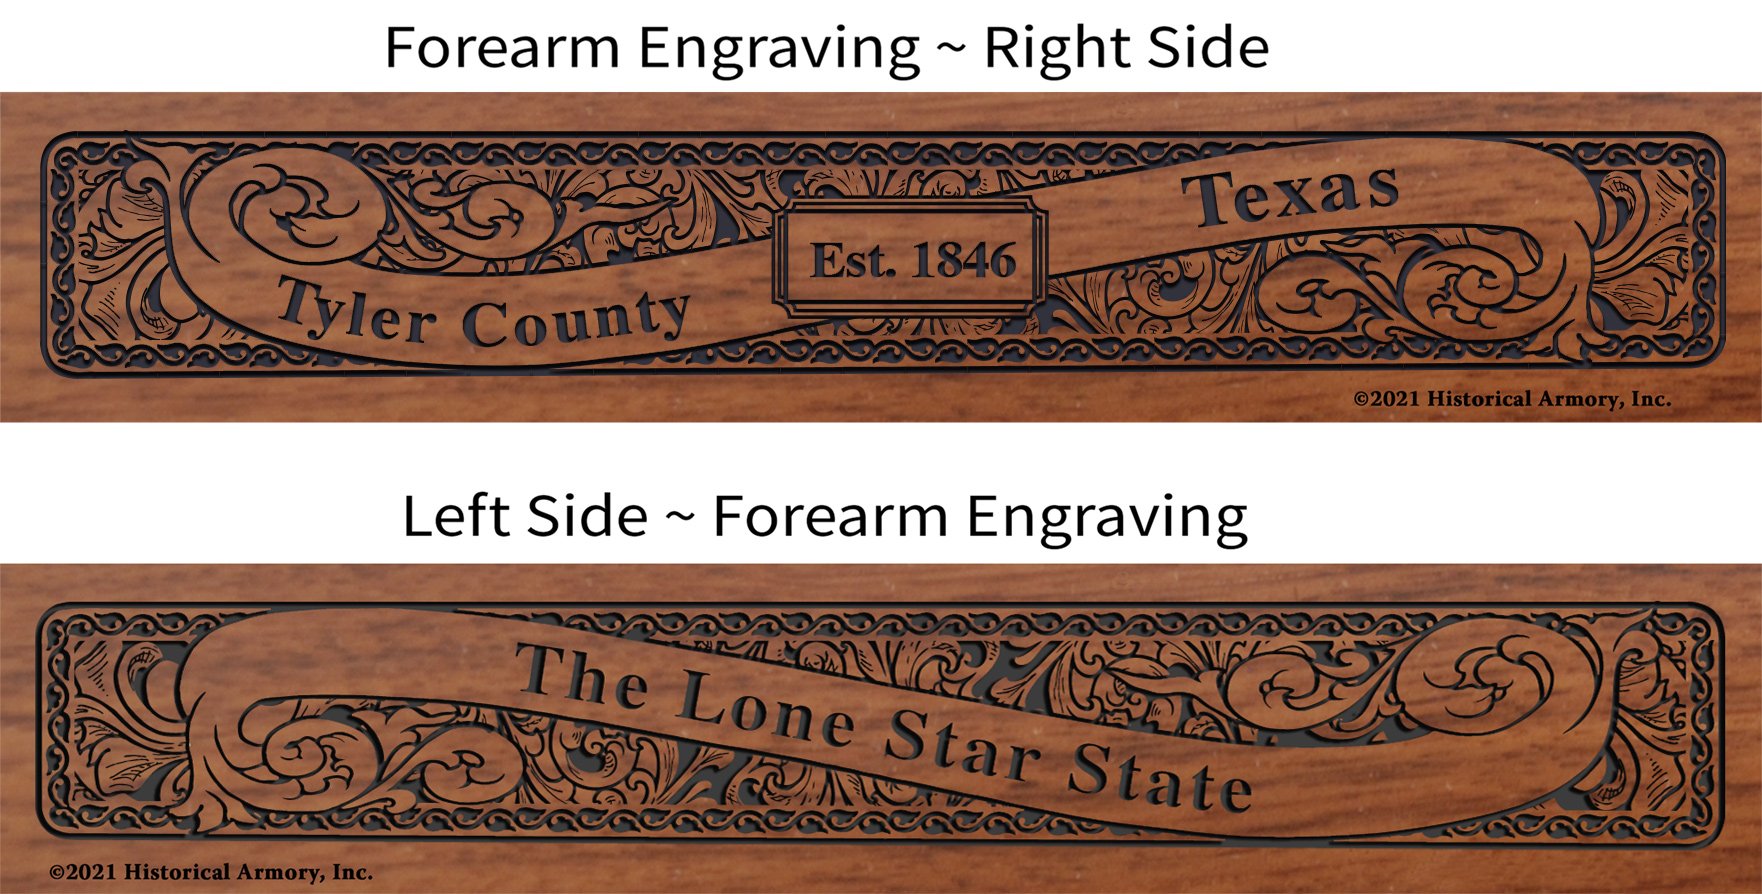 Tyler County Texas Establishment and Motto History Engraved Rifle Forearm